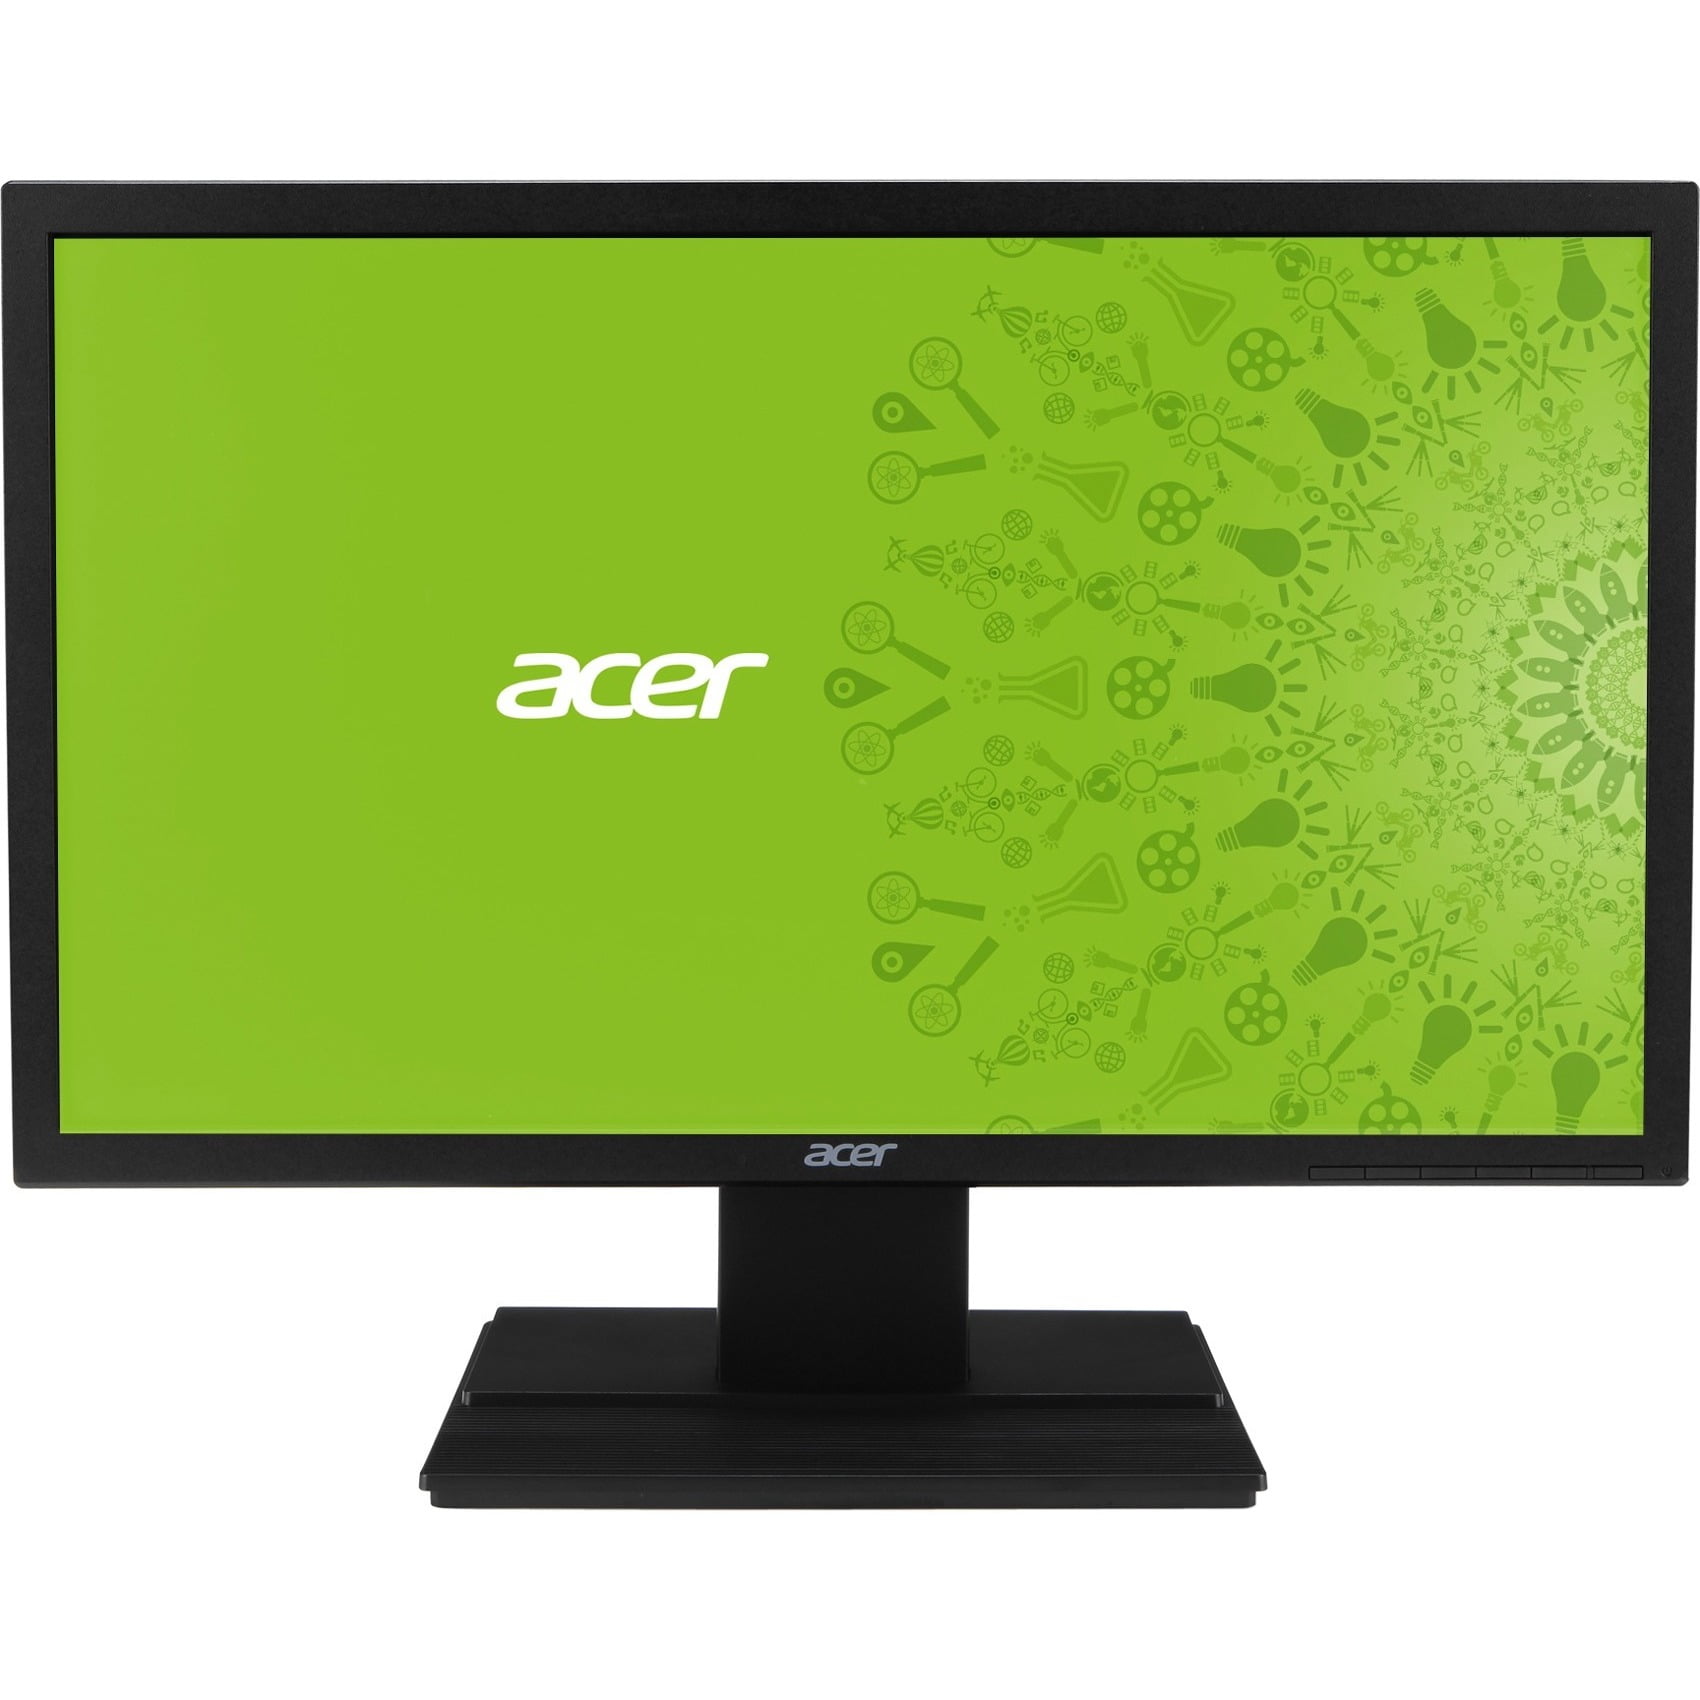 Acer 1920x1080 LED w Speakers UM.FV6AA.005 - Walmart.com